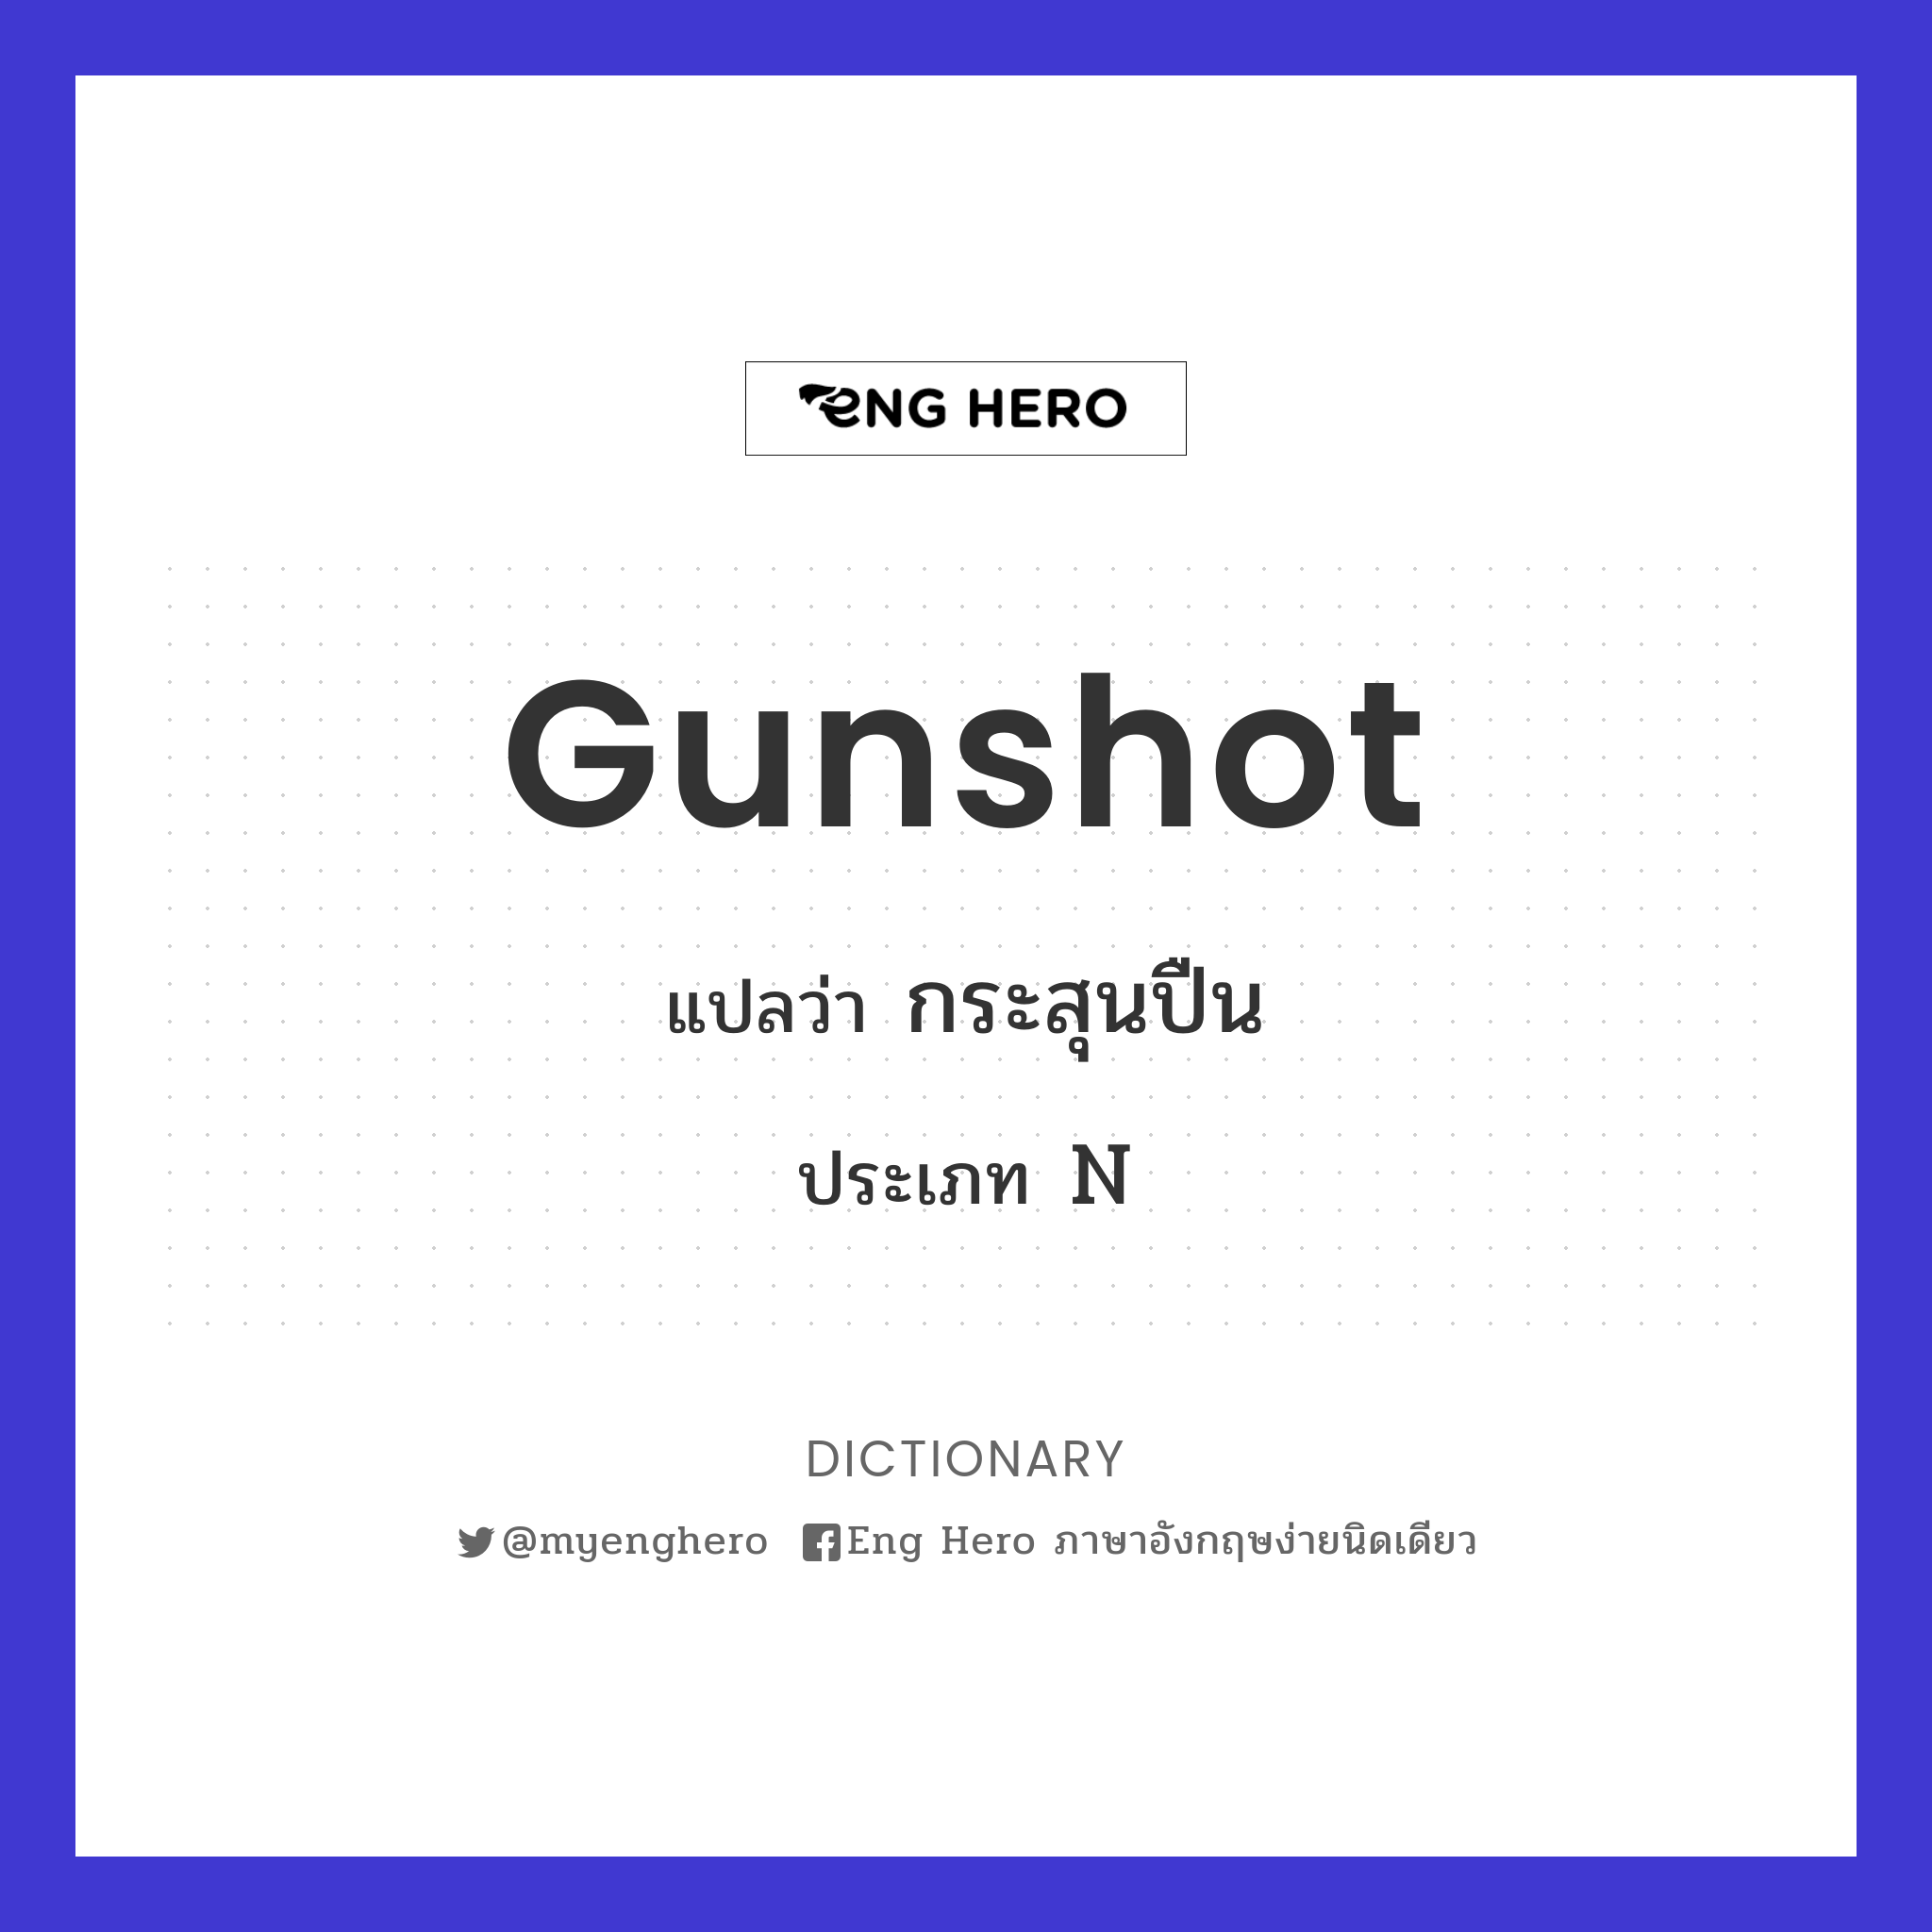 gunshot